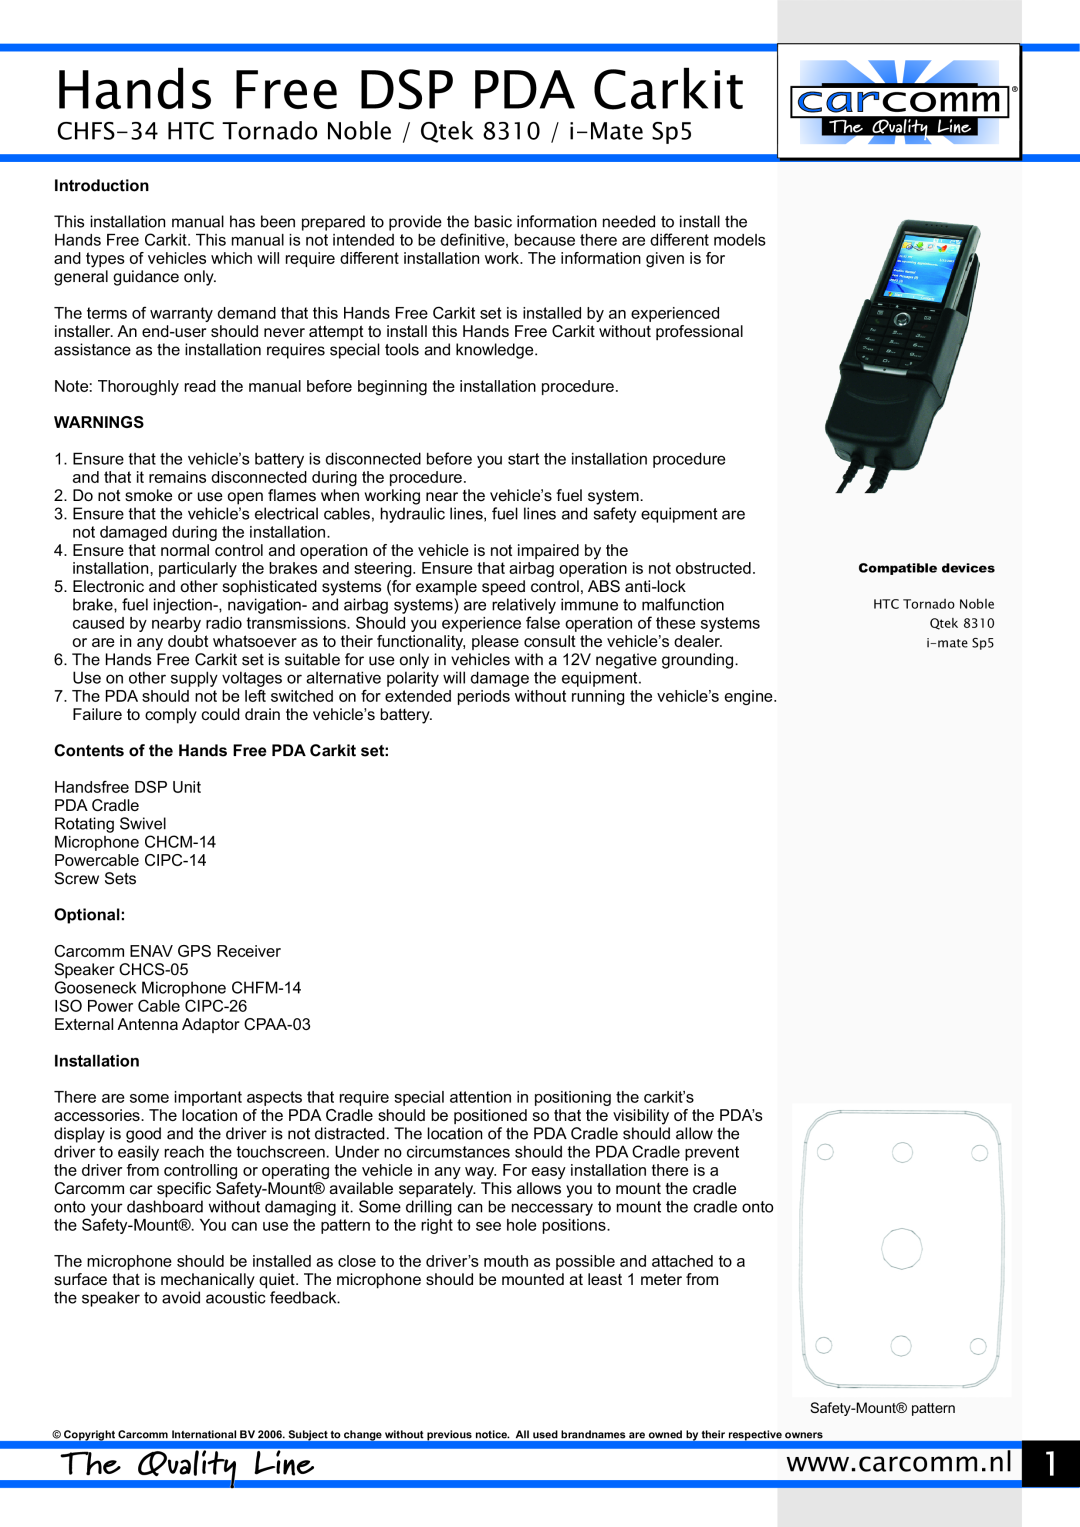 Carcomm manual Hands Free DSP PDA Carkit, CHFS-34 HTC Tornado Noble / Qtek 8310 / i-Mate Sp5, Introduction, Warnings 